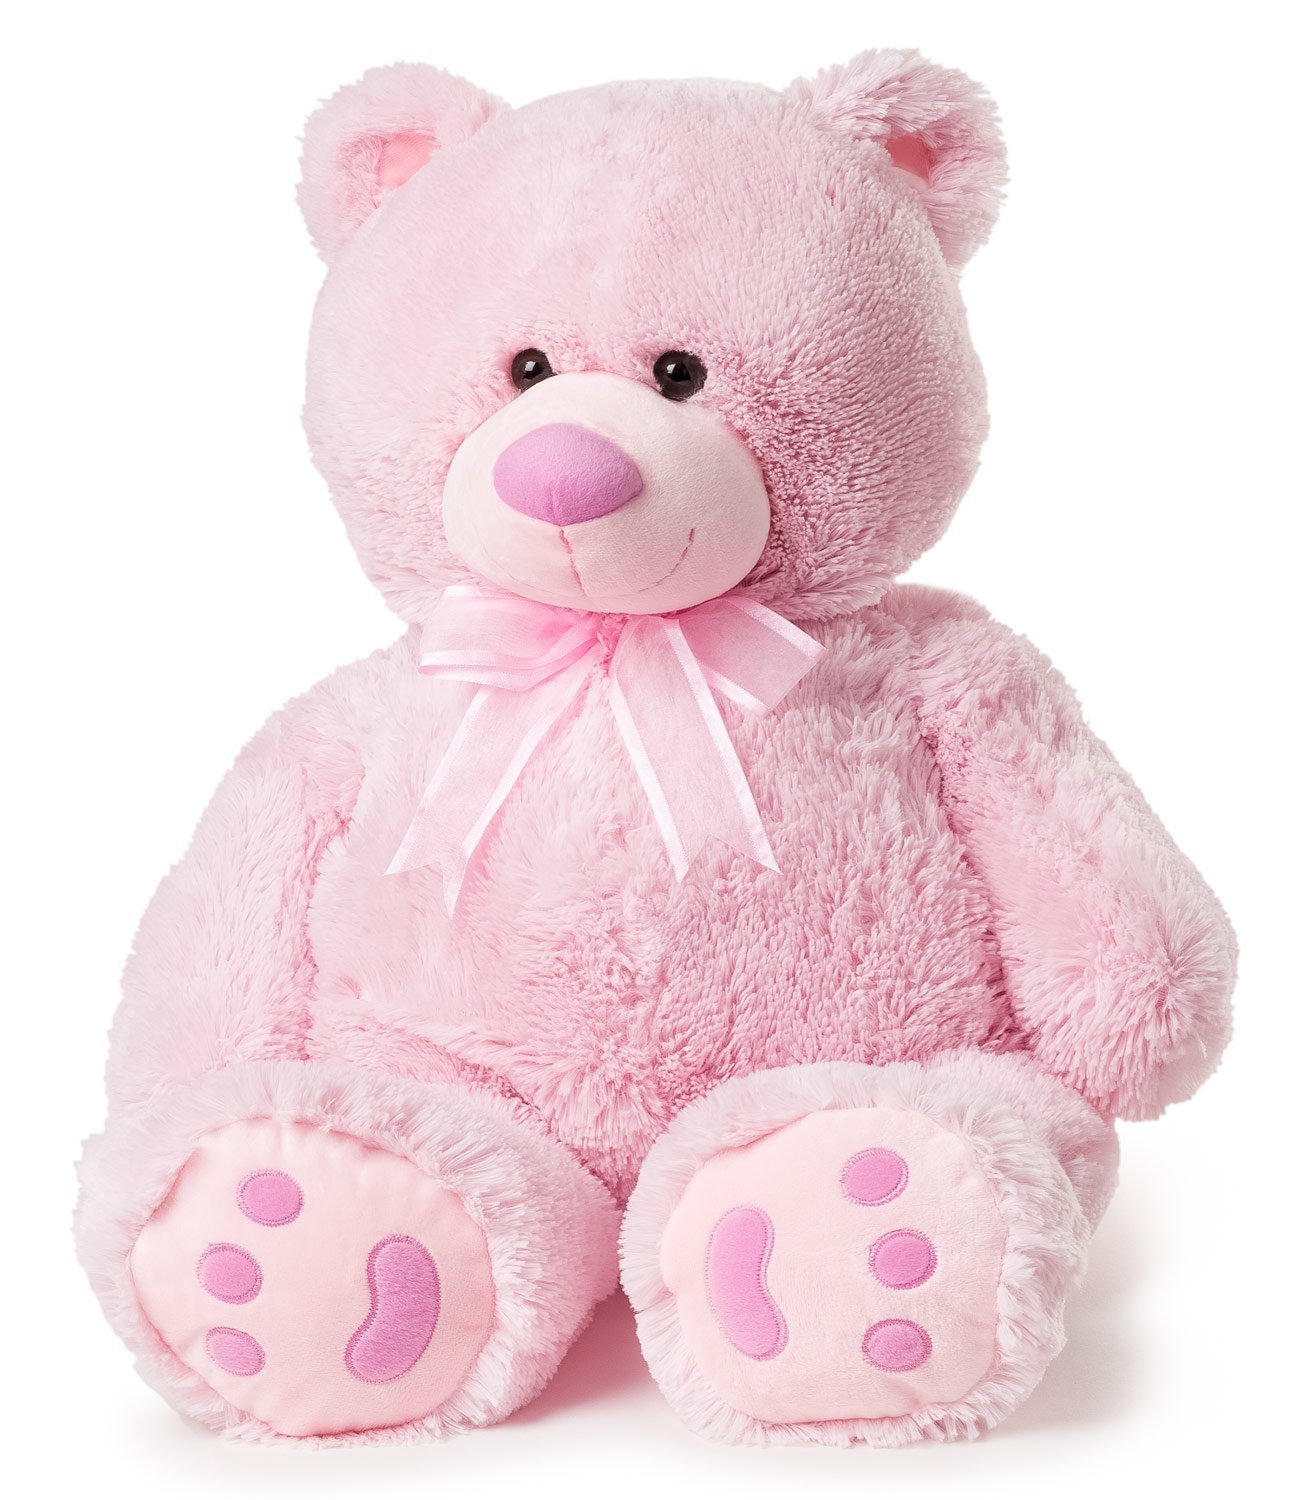 Amazon.com: Big Teddy Bear - Pink: Toys & Games